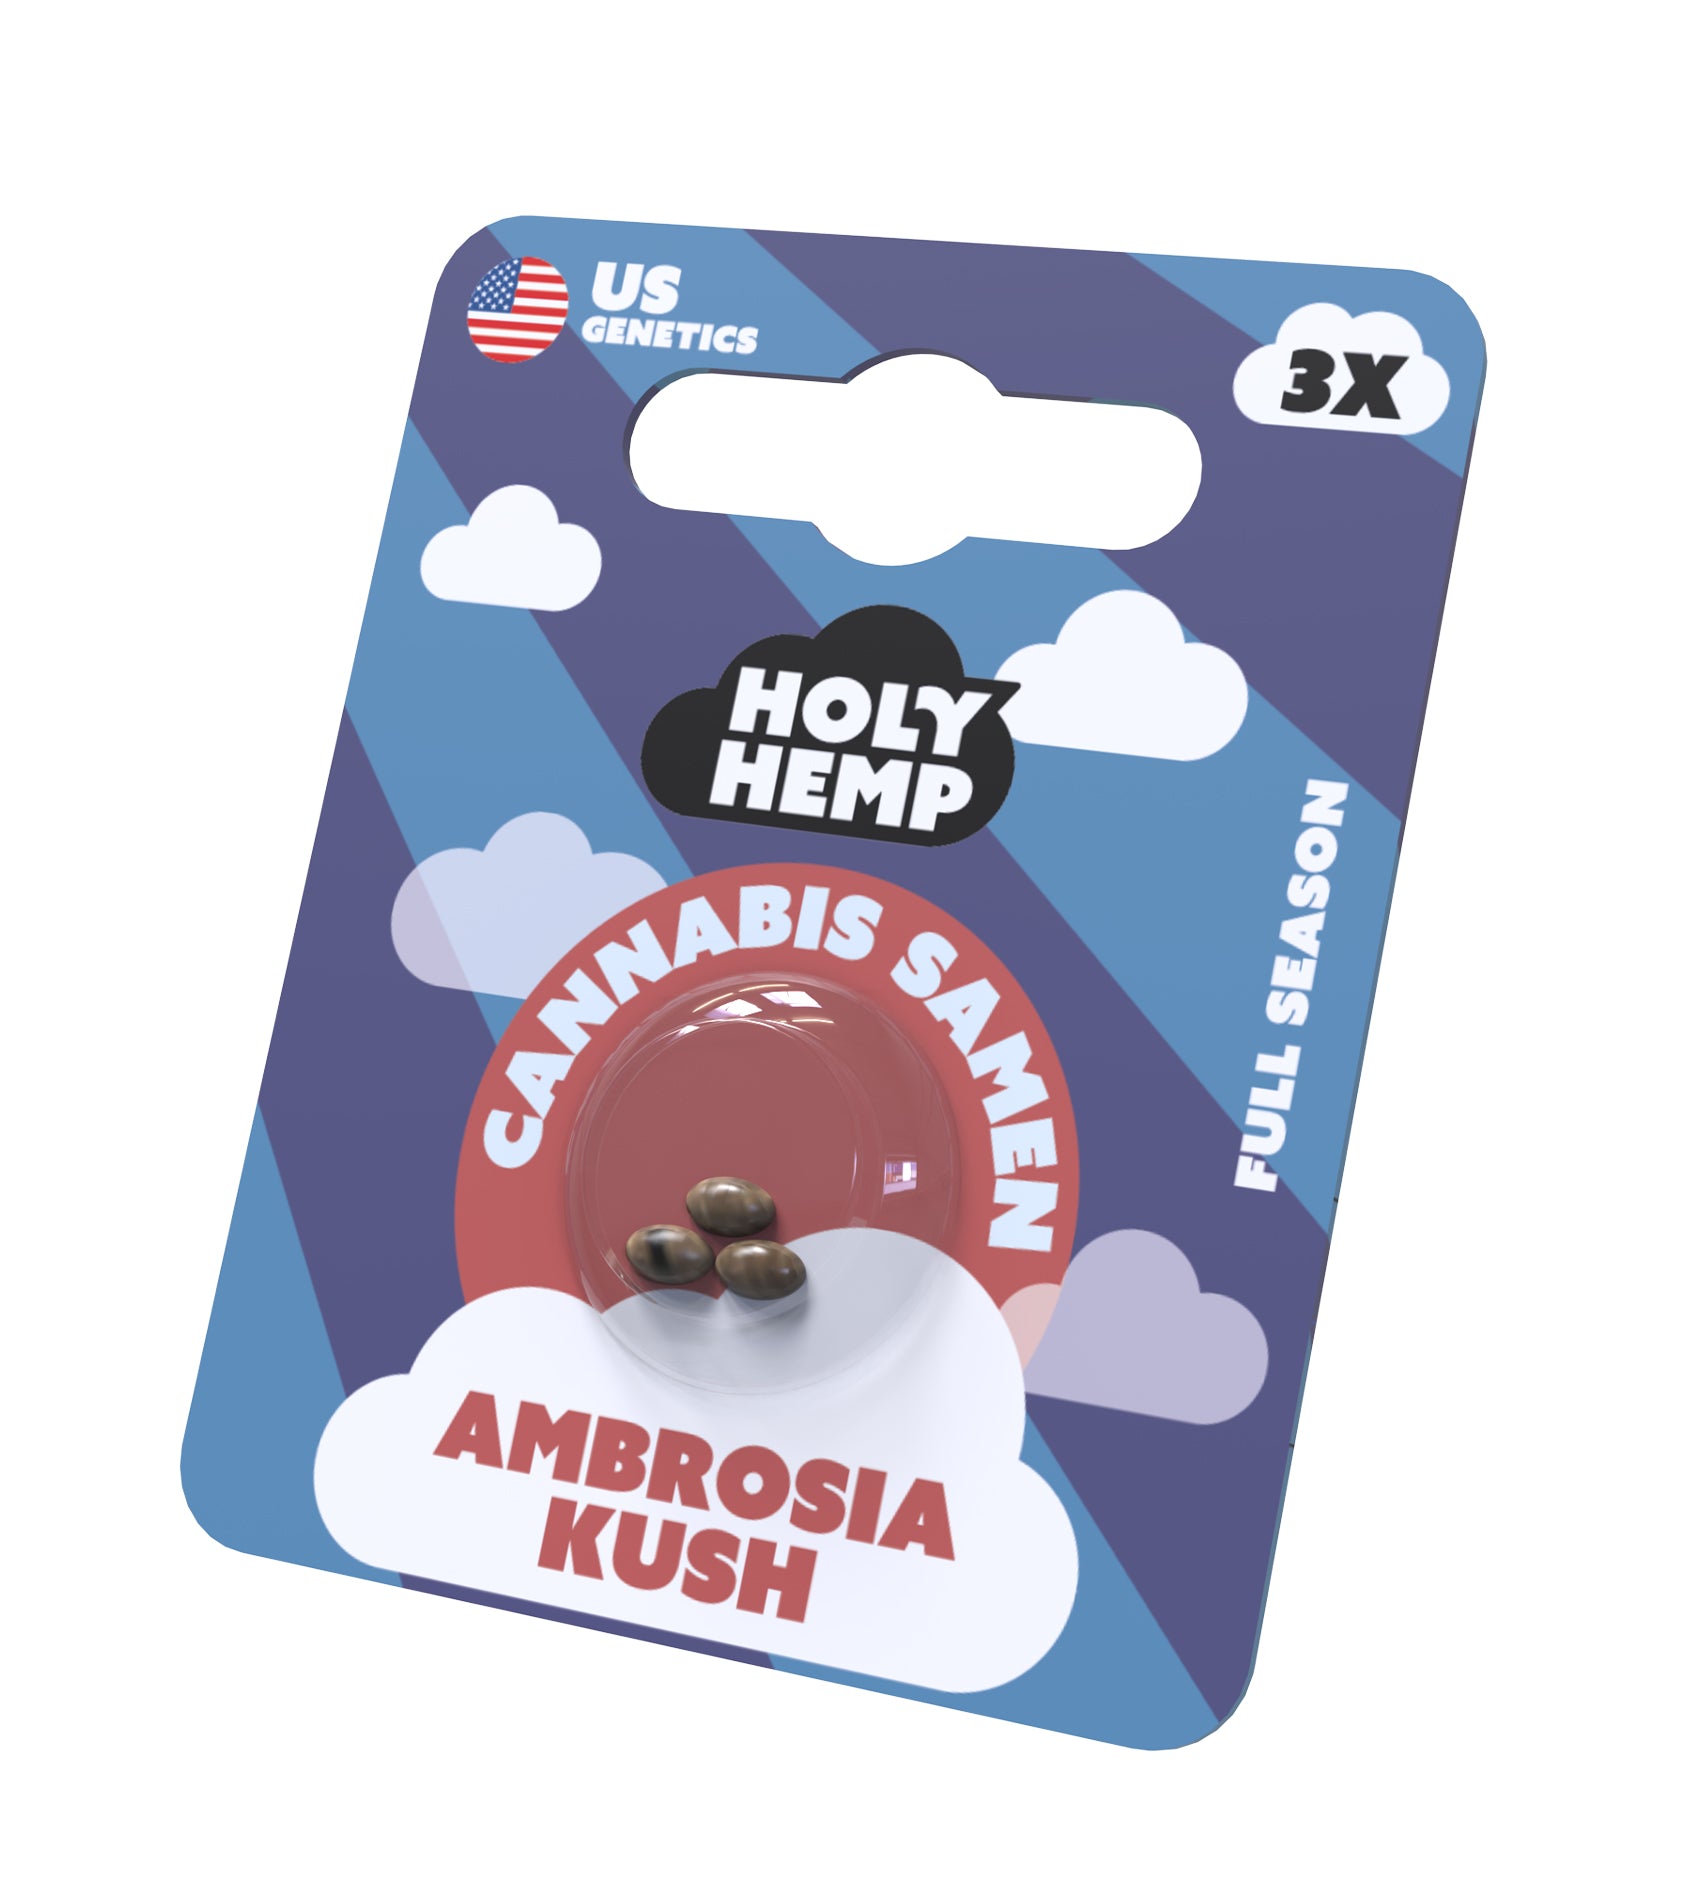 Cannabissamen Ambrosia Kush Full Season Holy Hemp